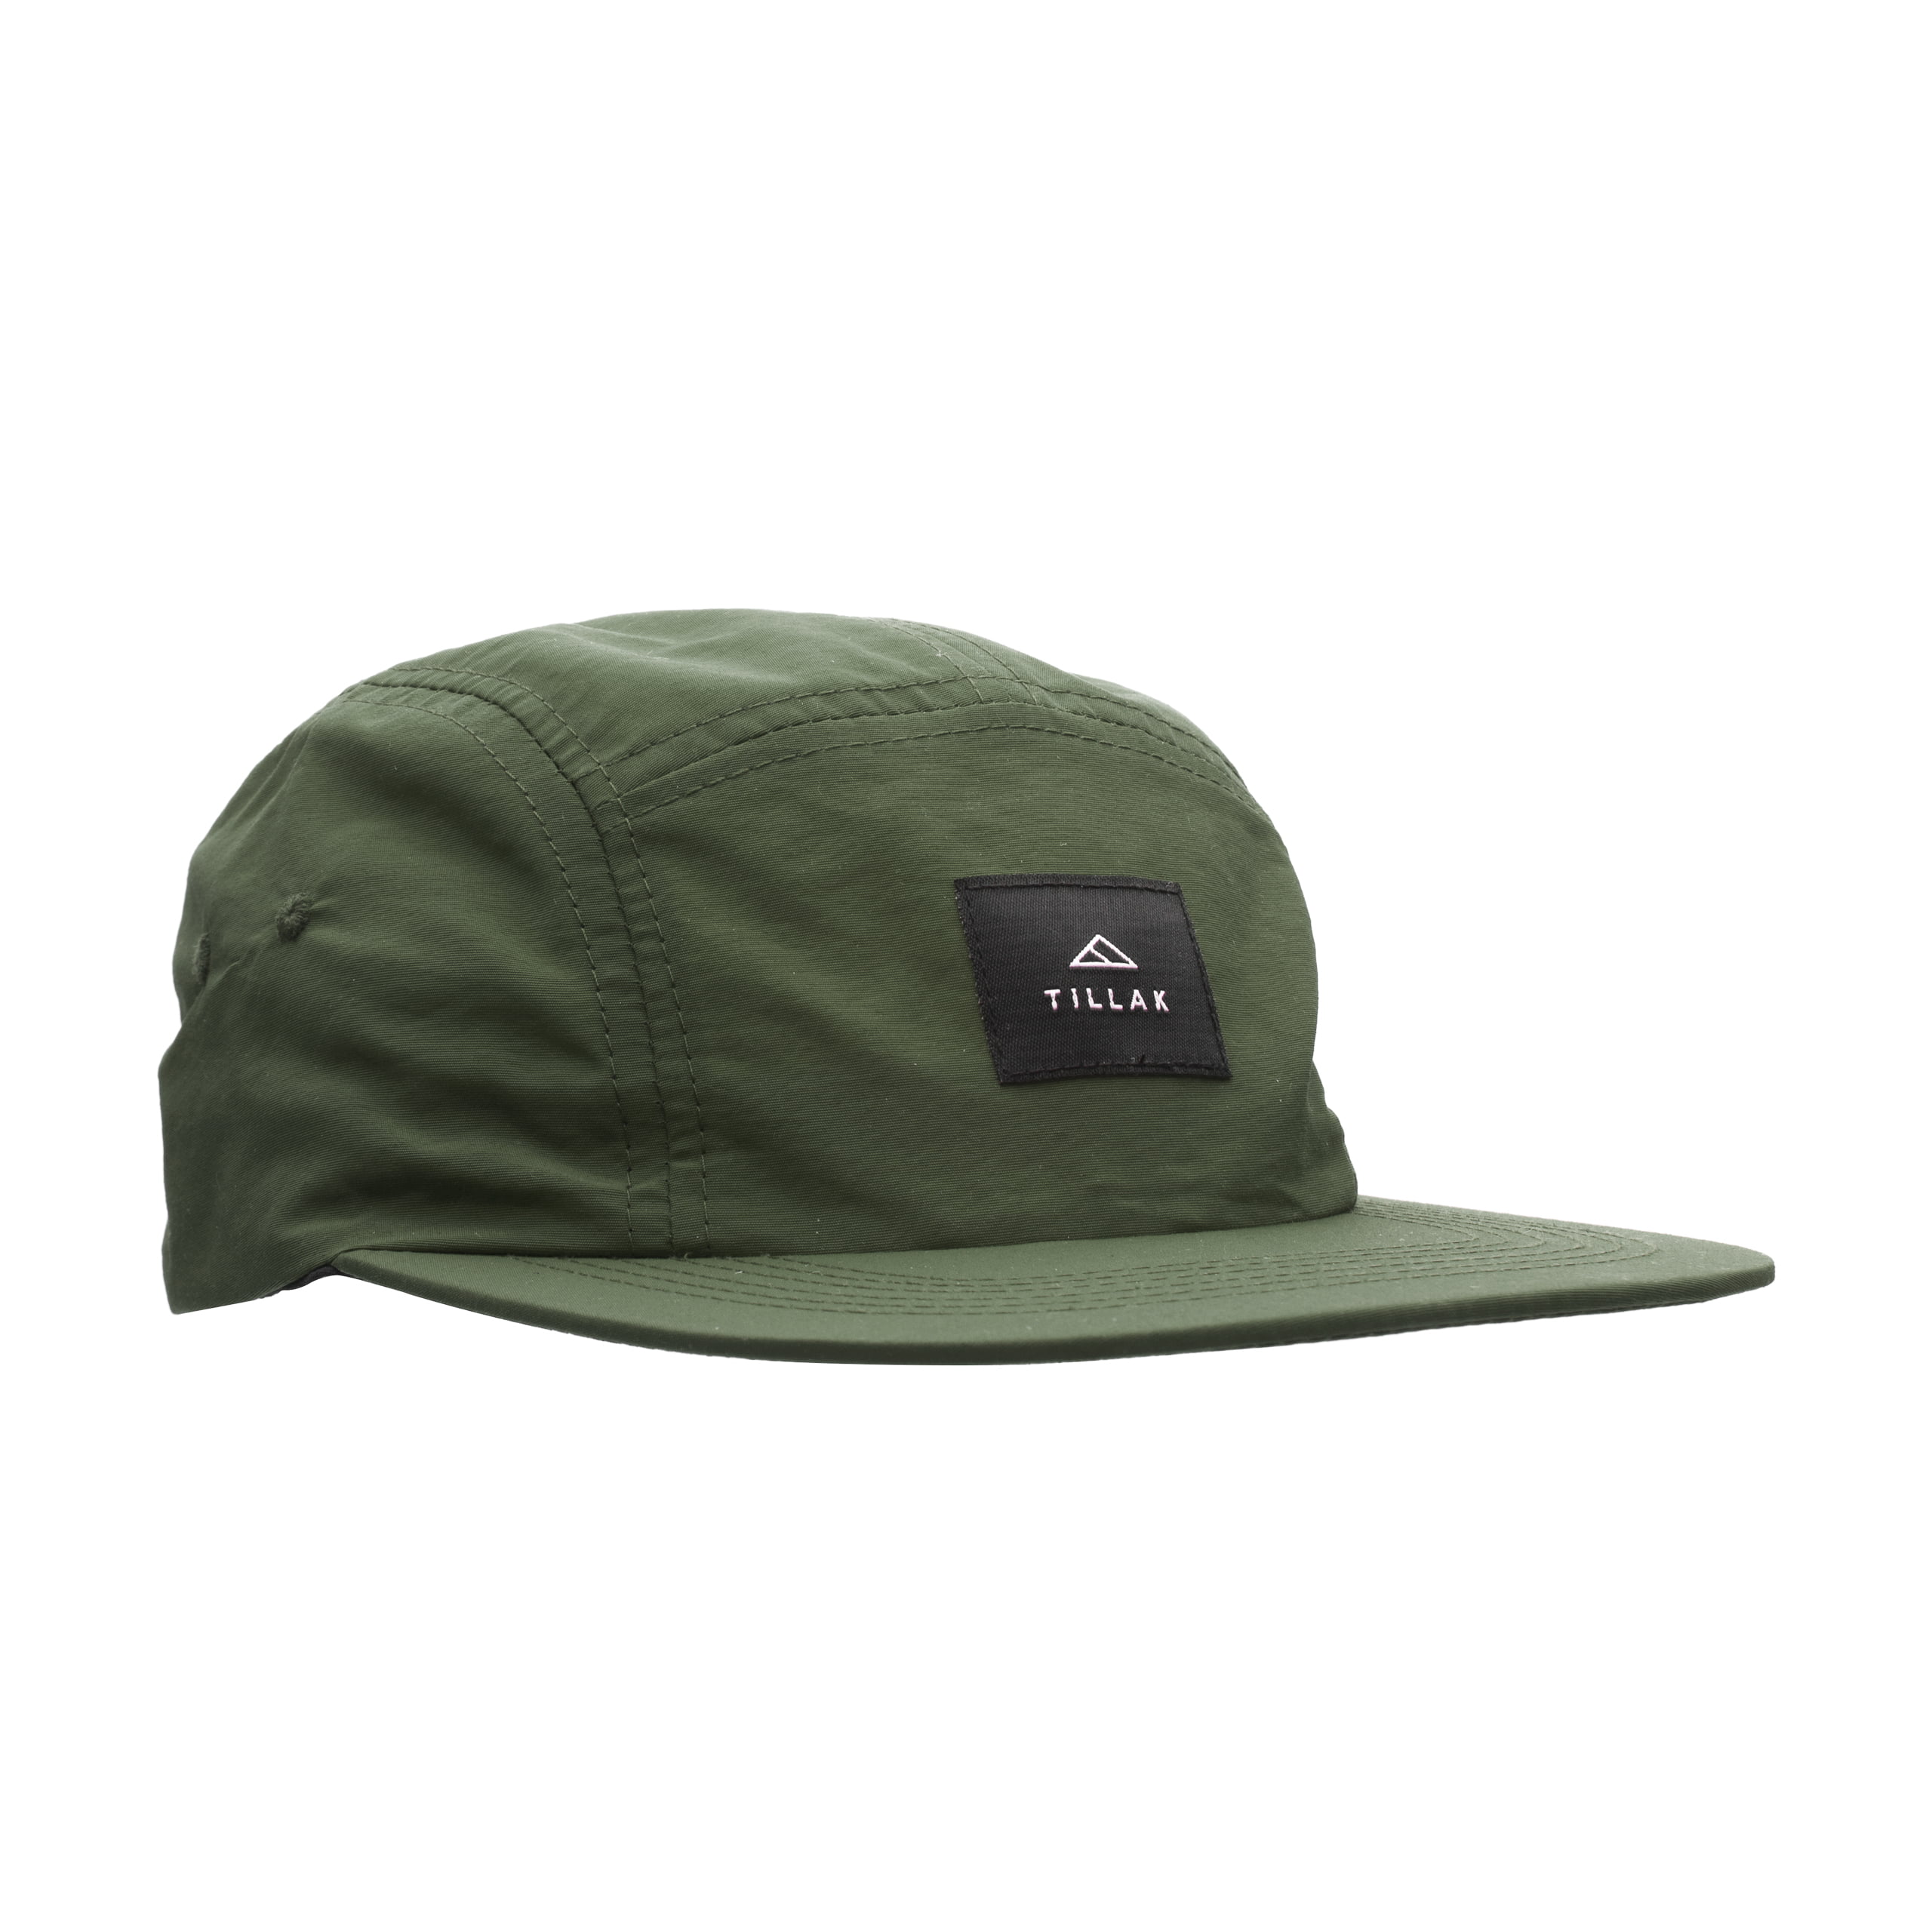 Tillak Wallowa Camp Hat, Lightweight Nylon 5 Panel Cap with Snap ...